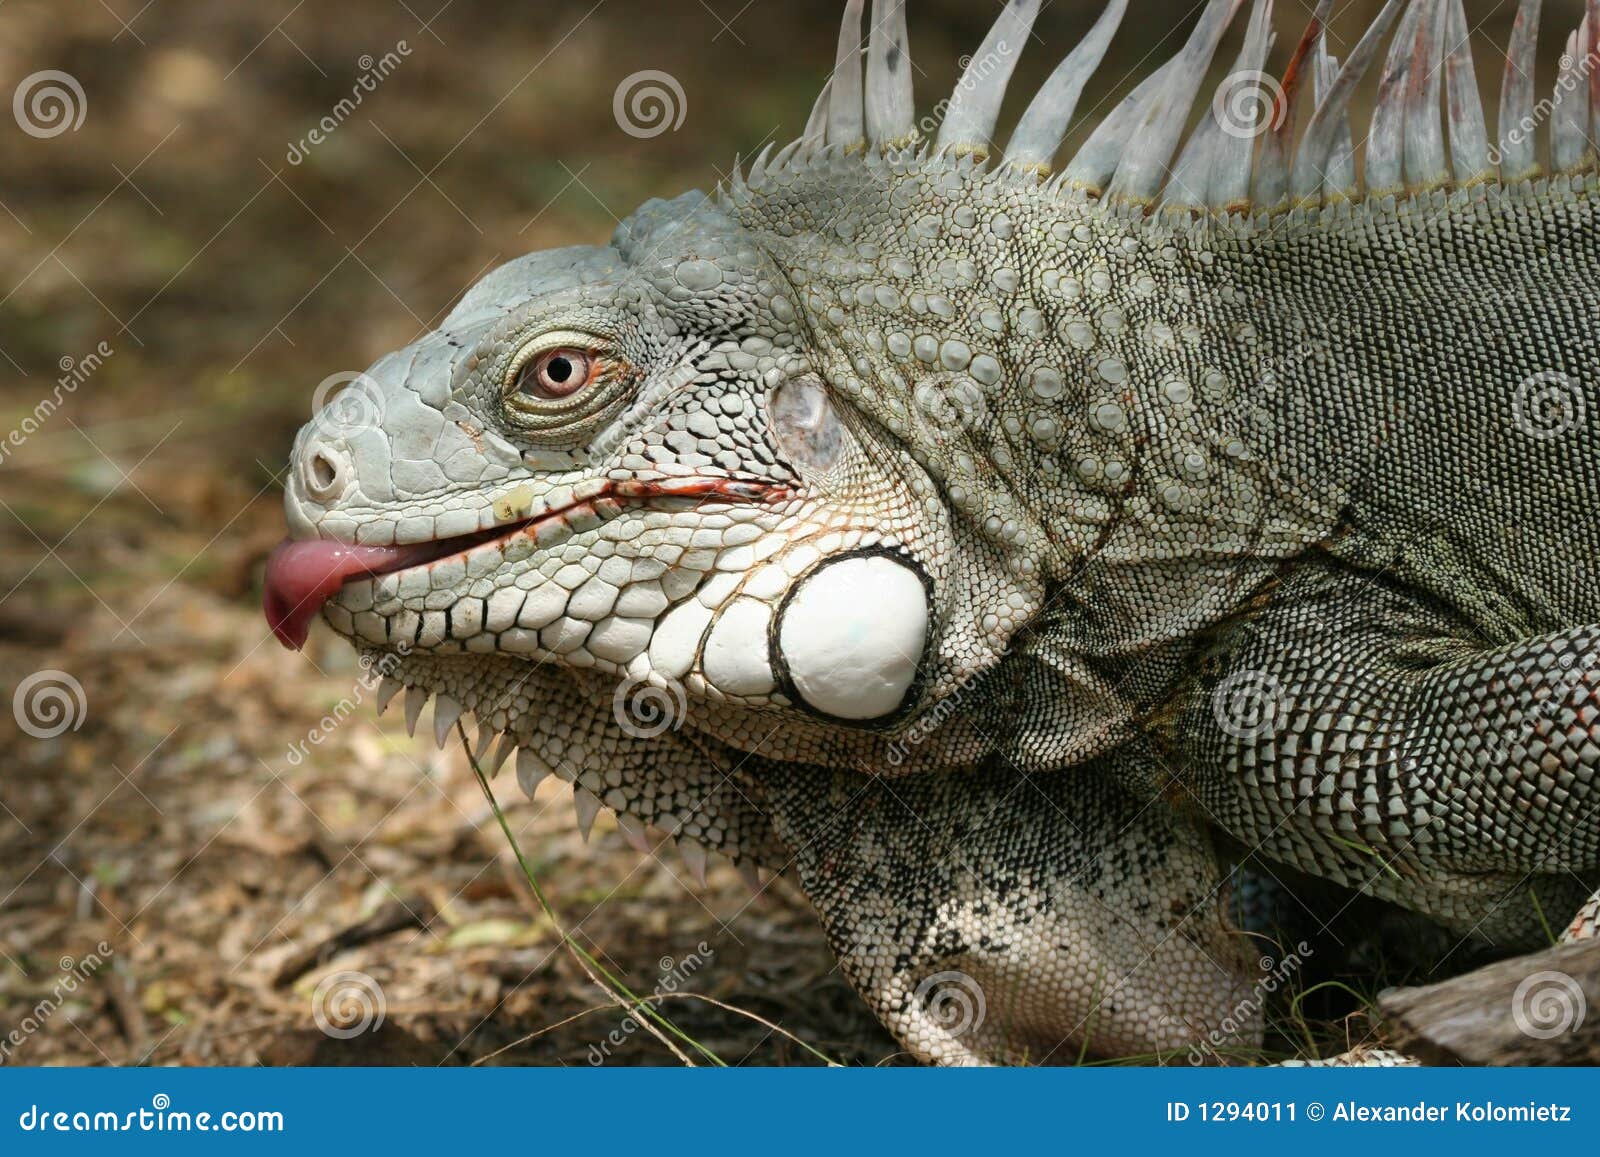 iguana is